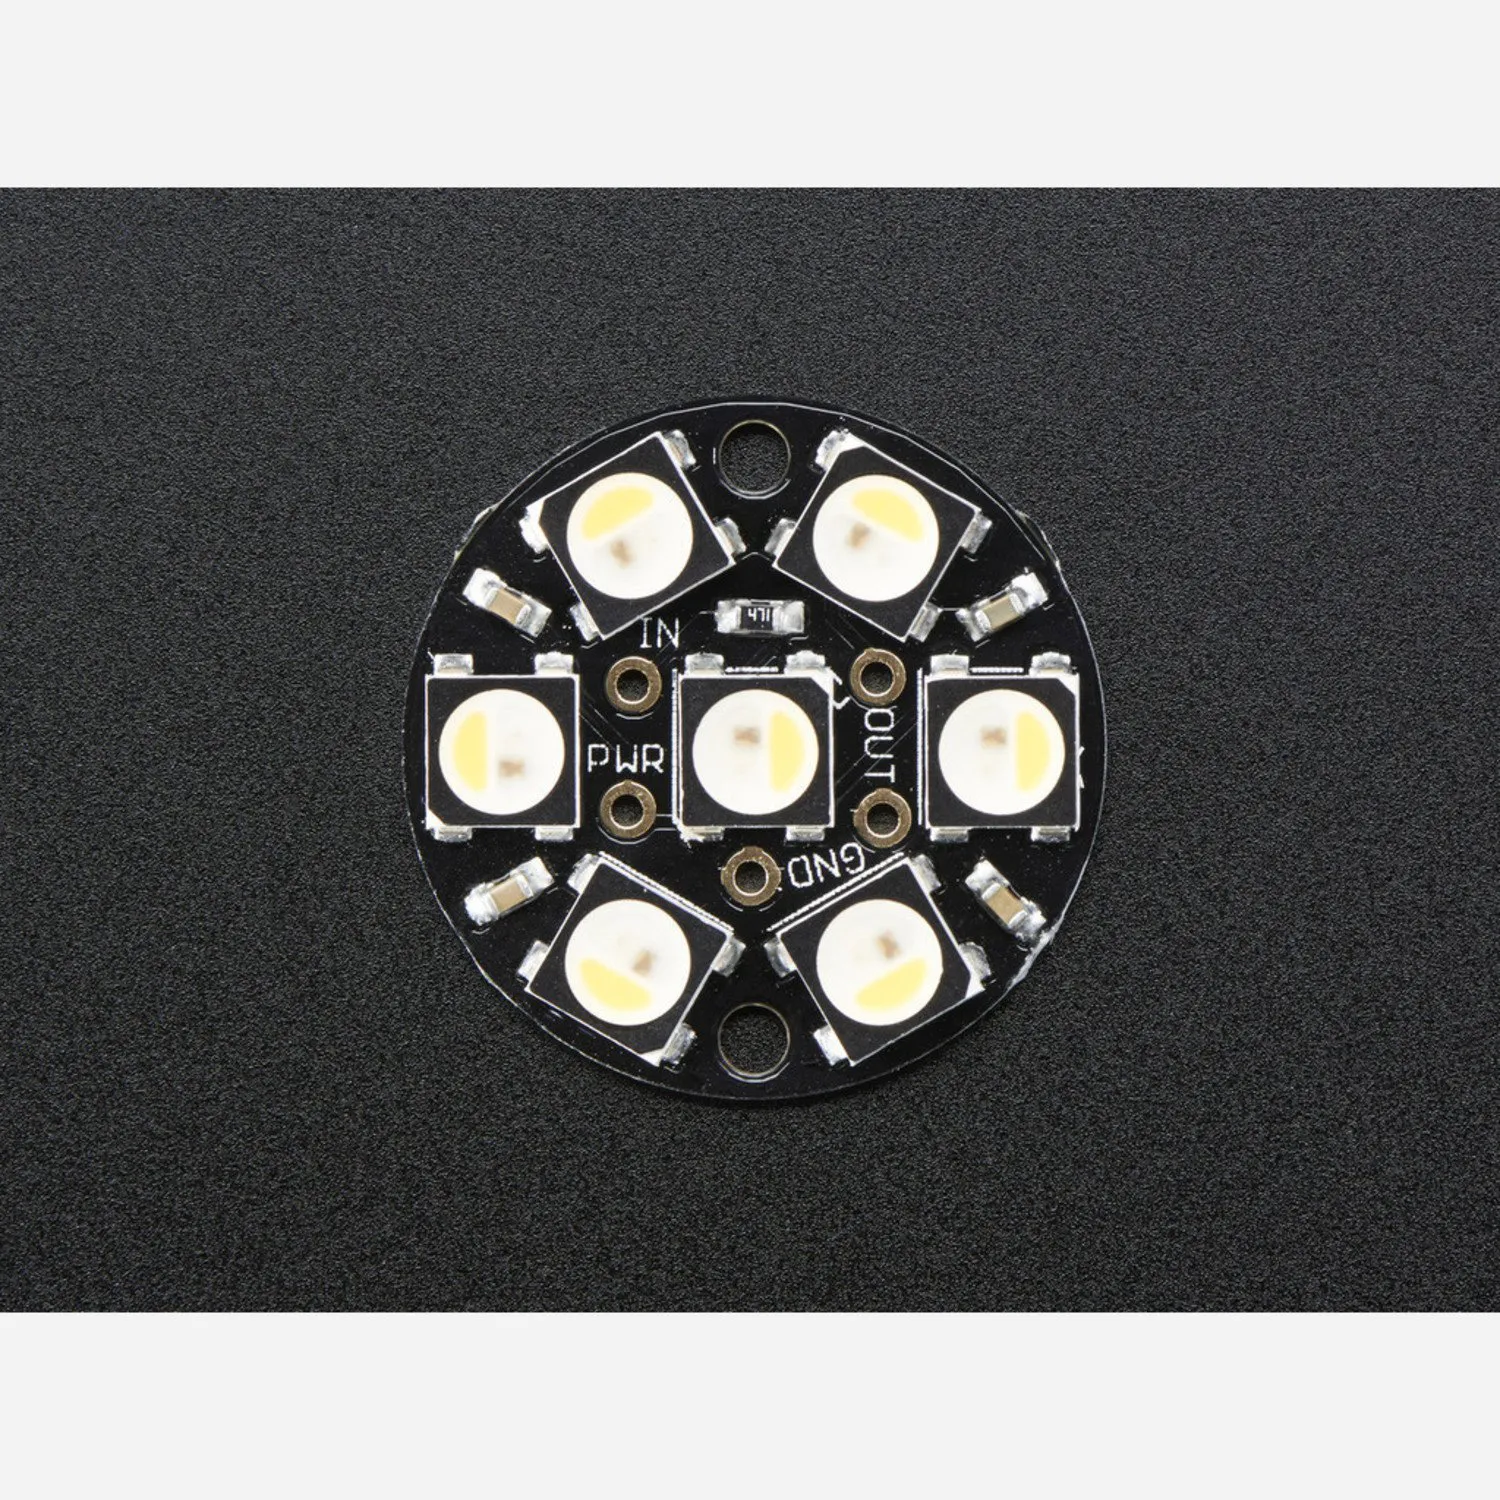 Photo of NeoPixel Jewel - 7 x 5050 RGBW LED w/ Integrated Drivers - Warm White - ~3000K